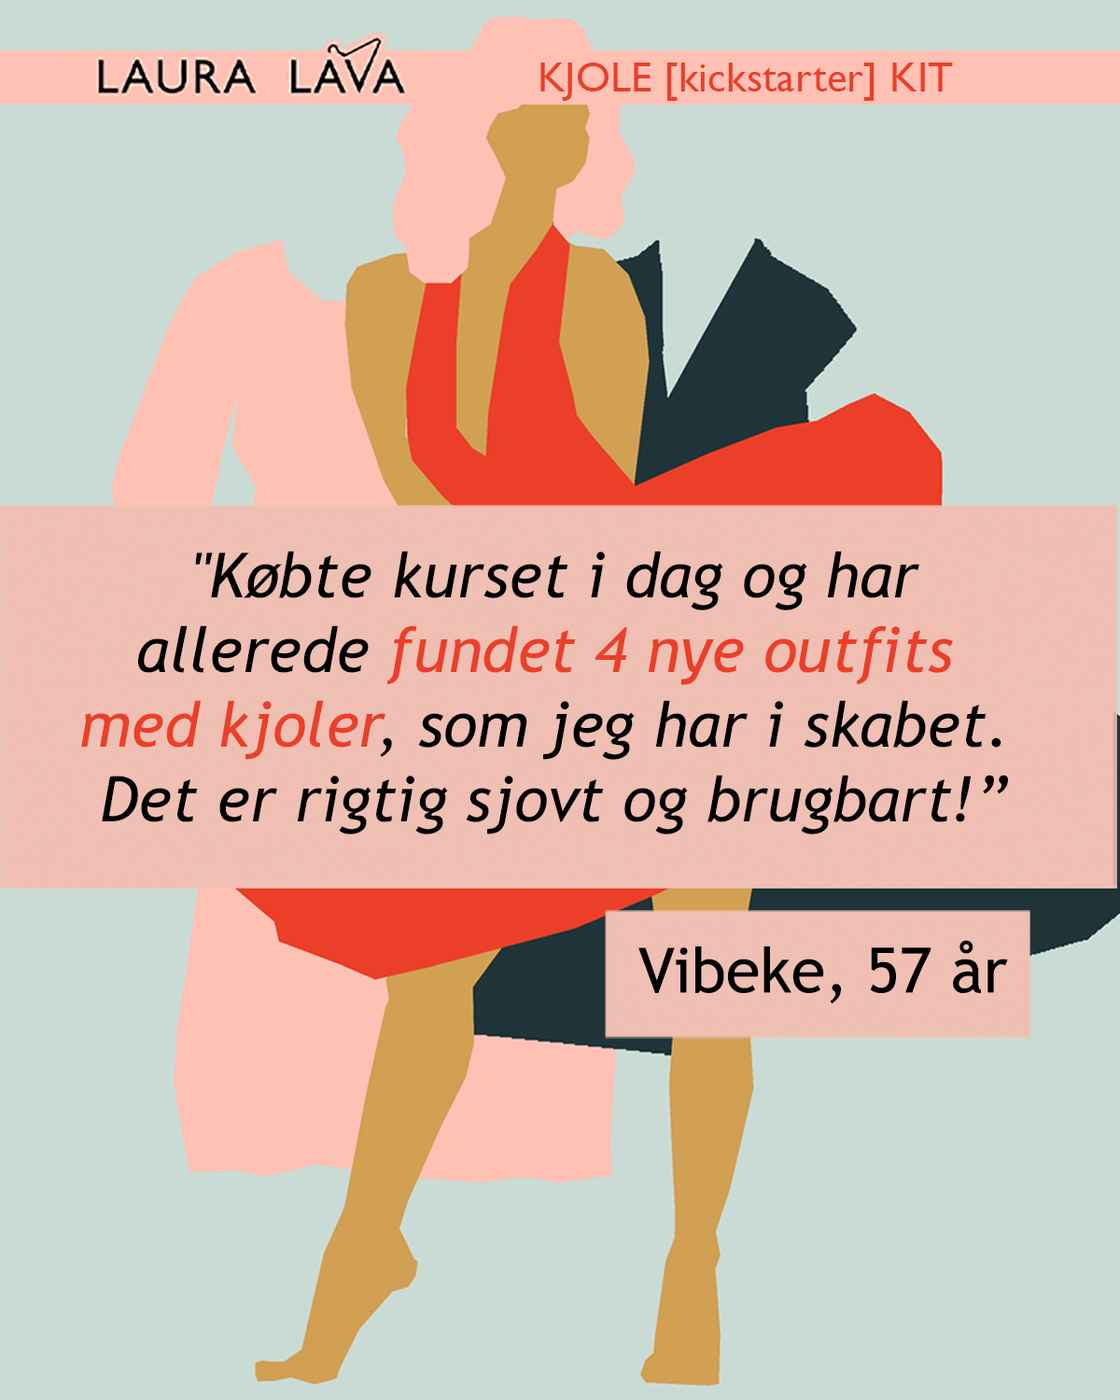 1080 x 1350 4 til 5 Kjole Kickstarter citat Vibeke 57 år